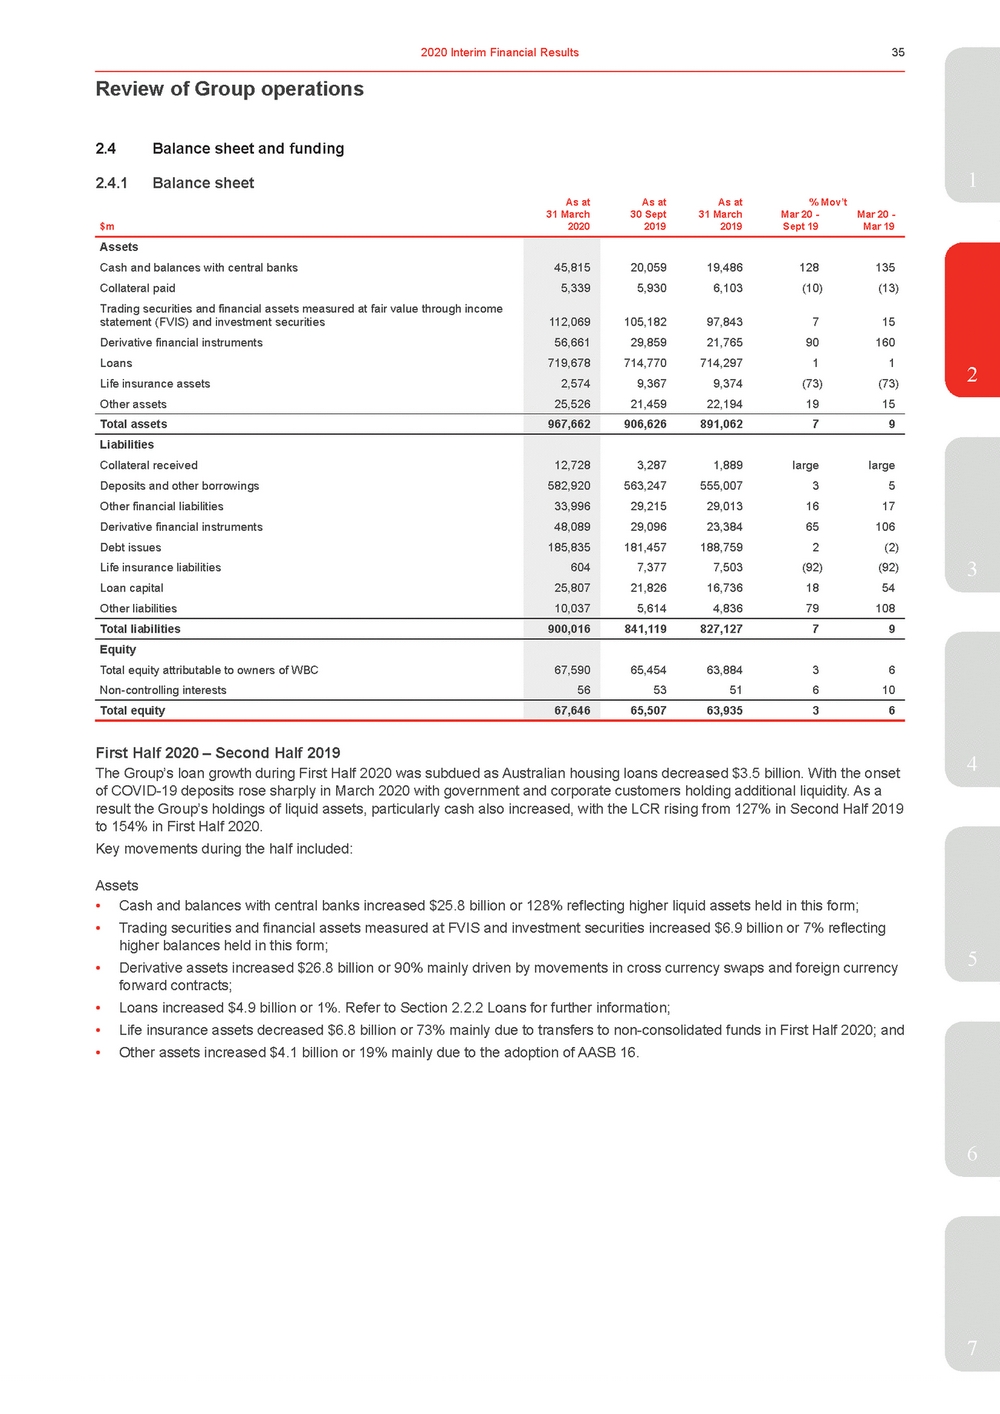 11676-3-ex1_westpac 2020 interim financial results announcement_page_040.jpg